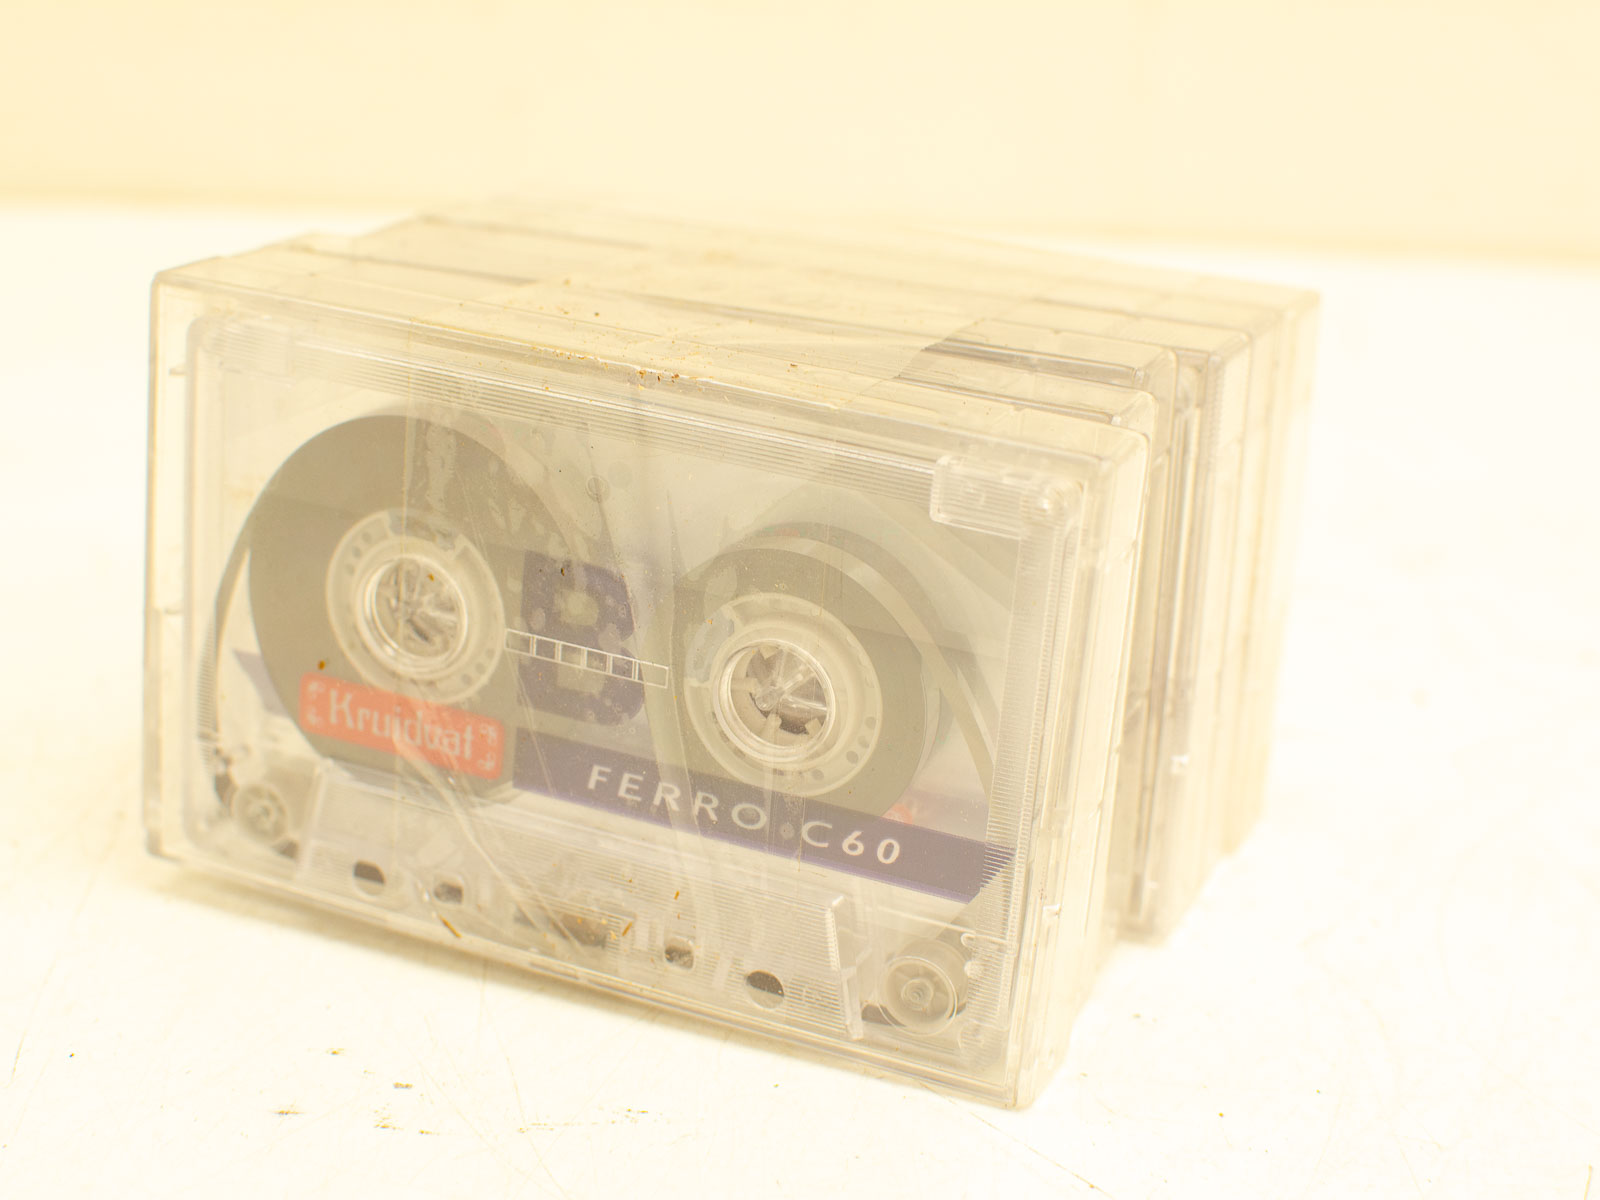 6 cassettebandjes  31941